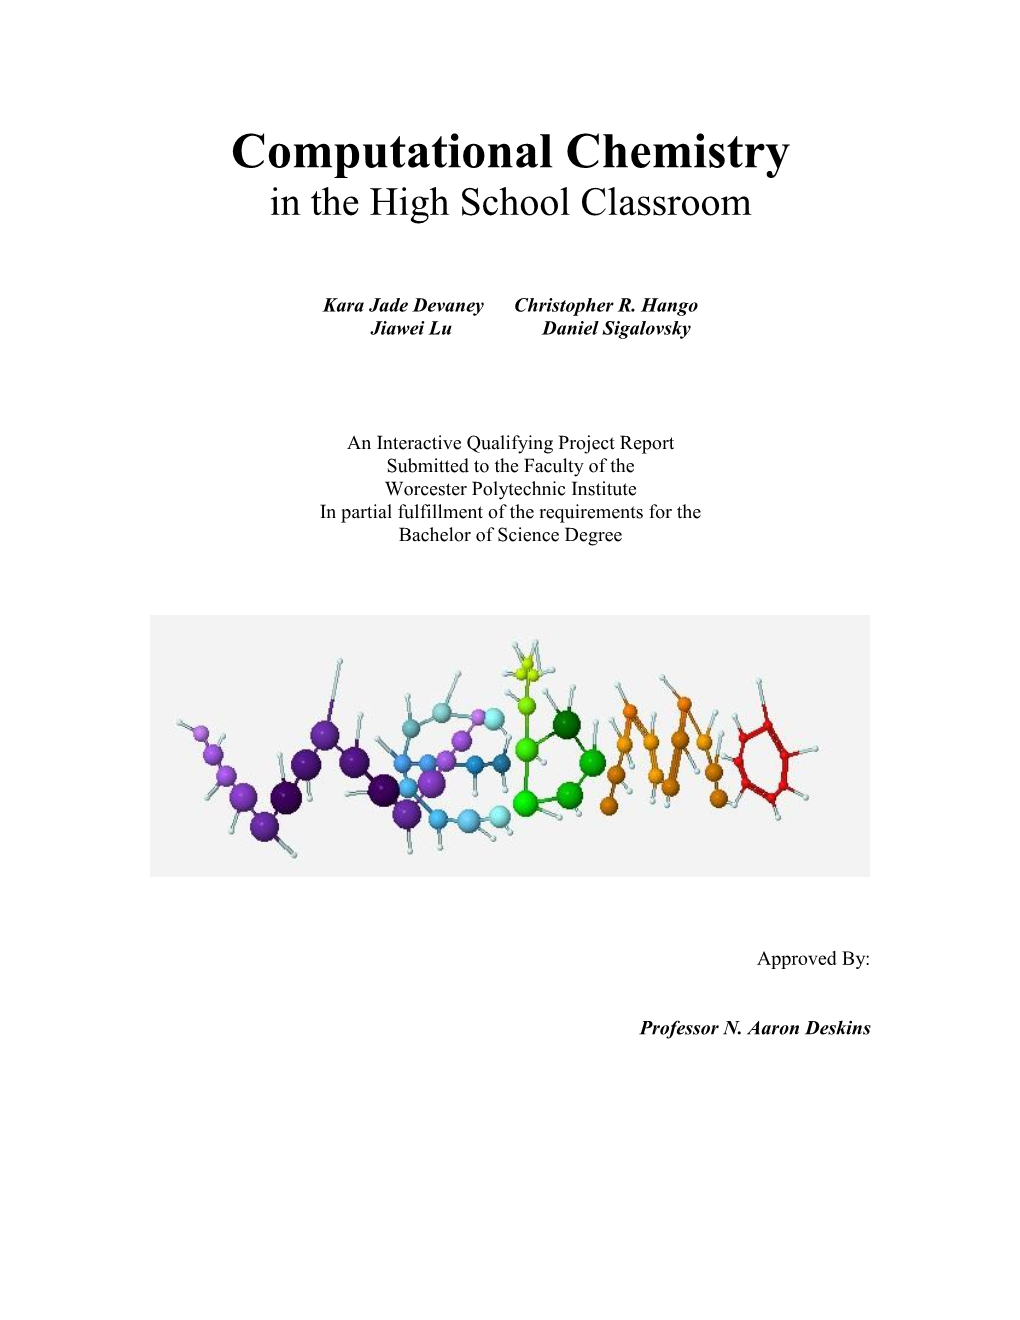 Computational Chemistry in the High School Classroom